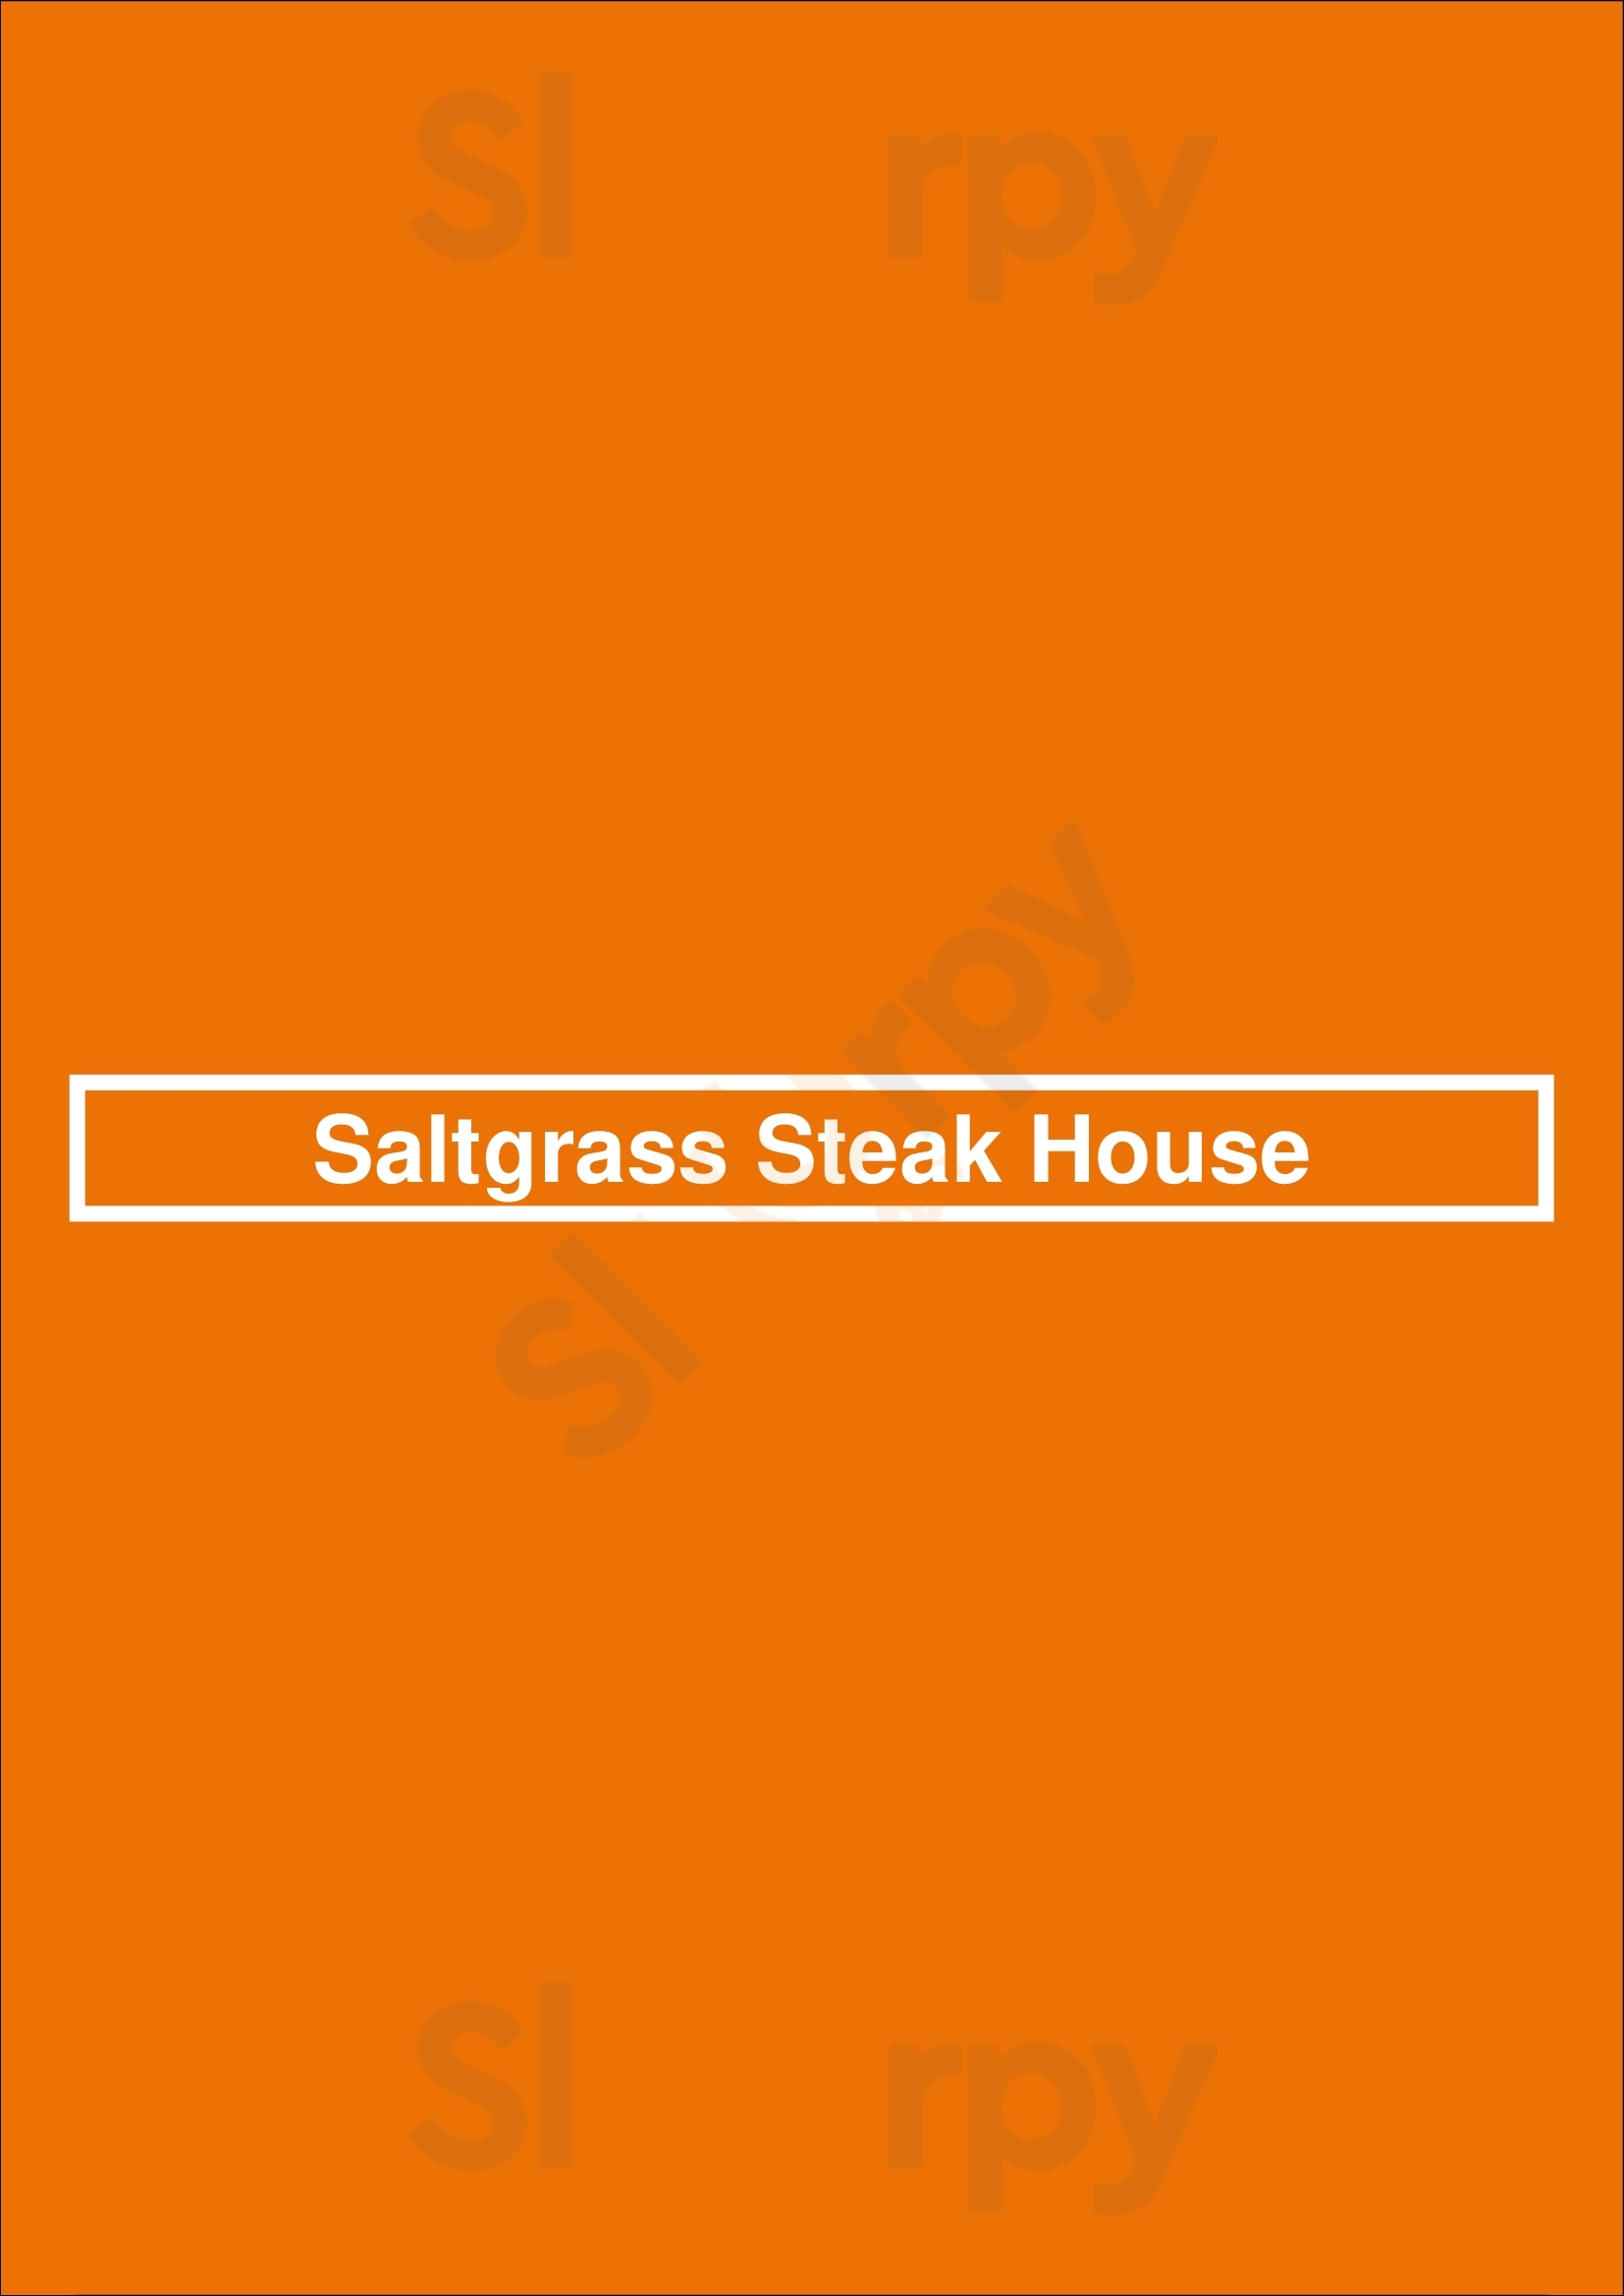 Saltgrass Steak House Cypress Menu - 1